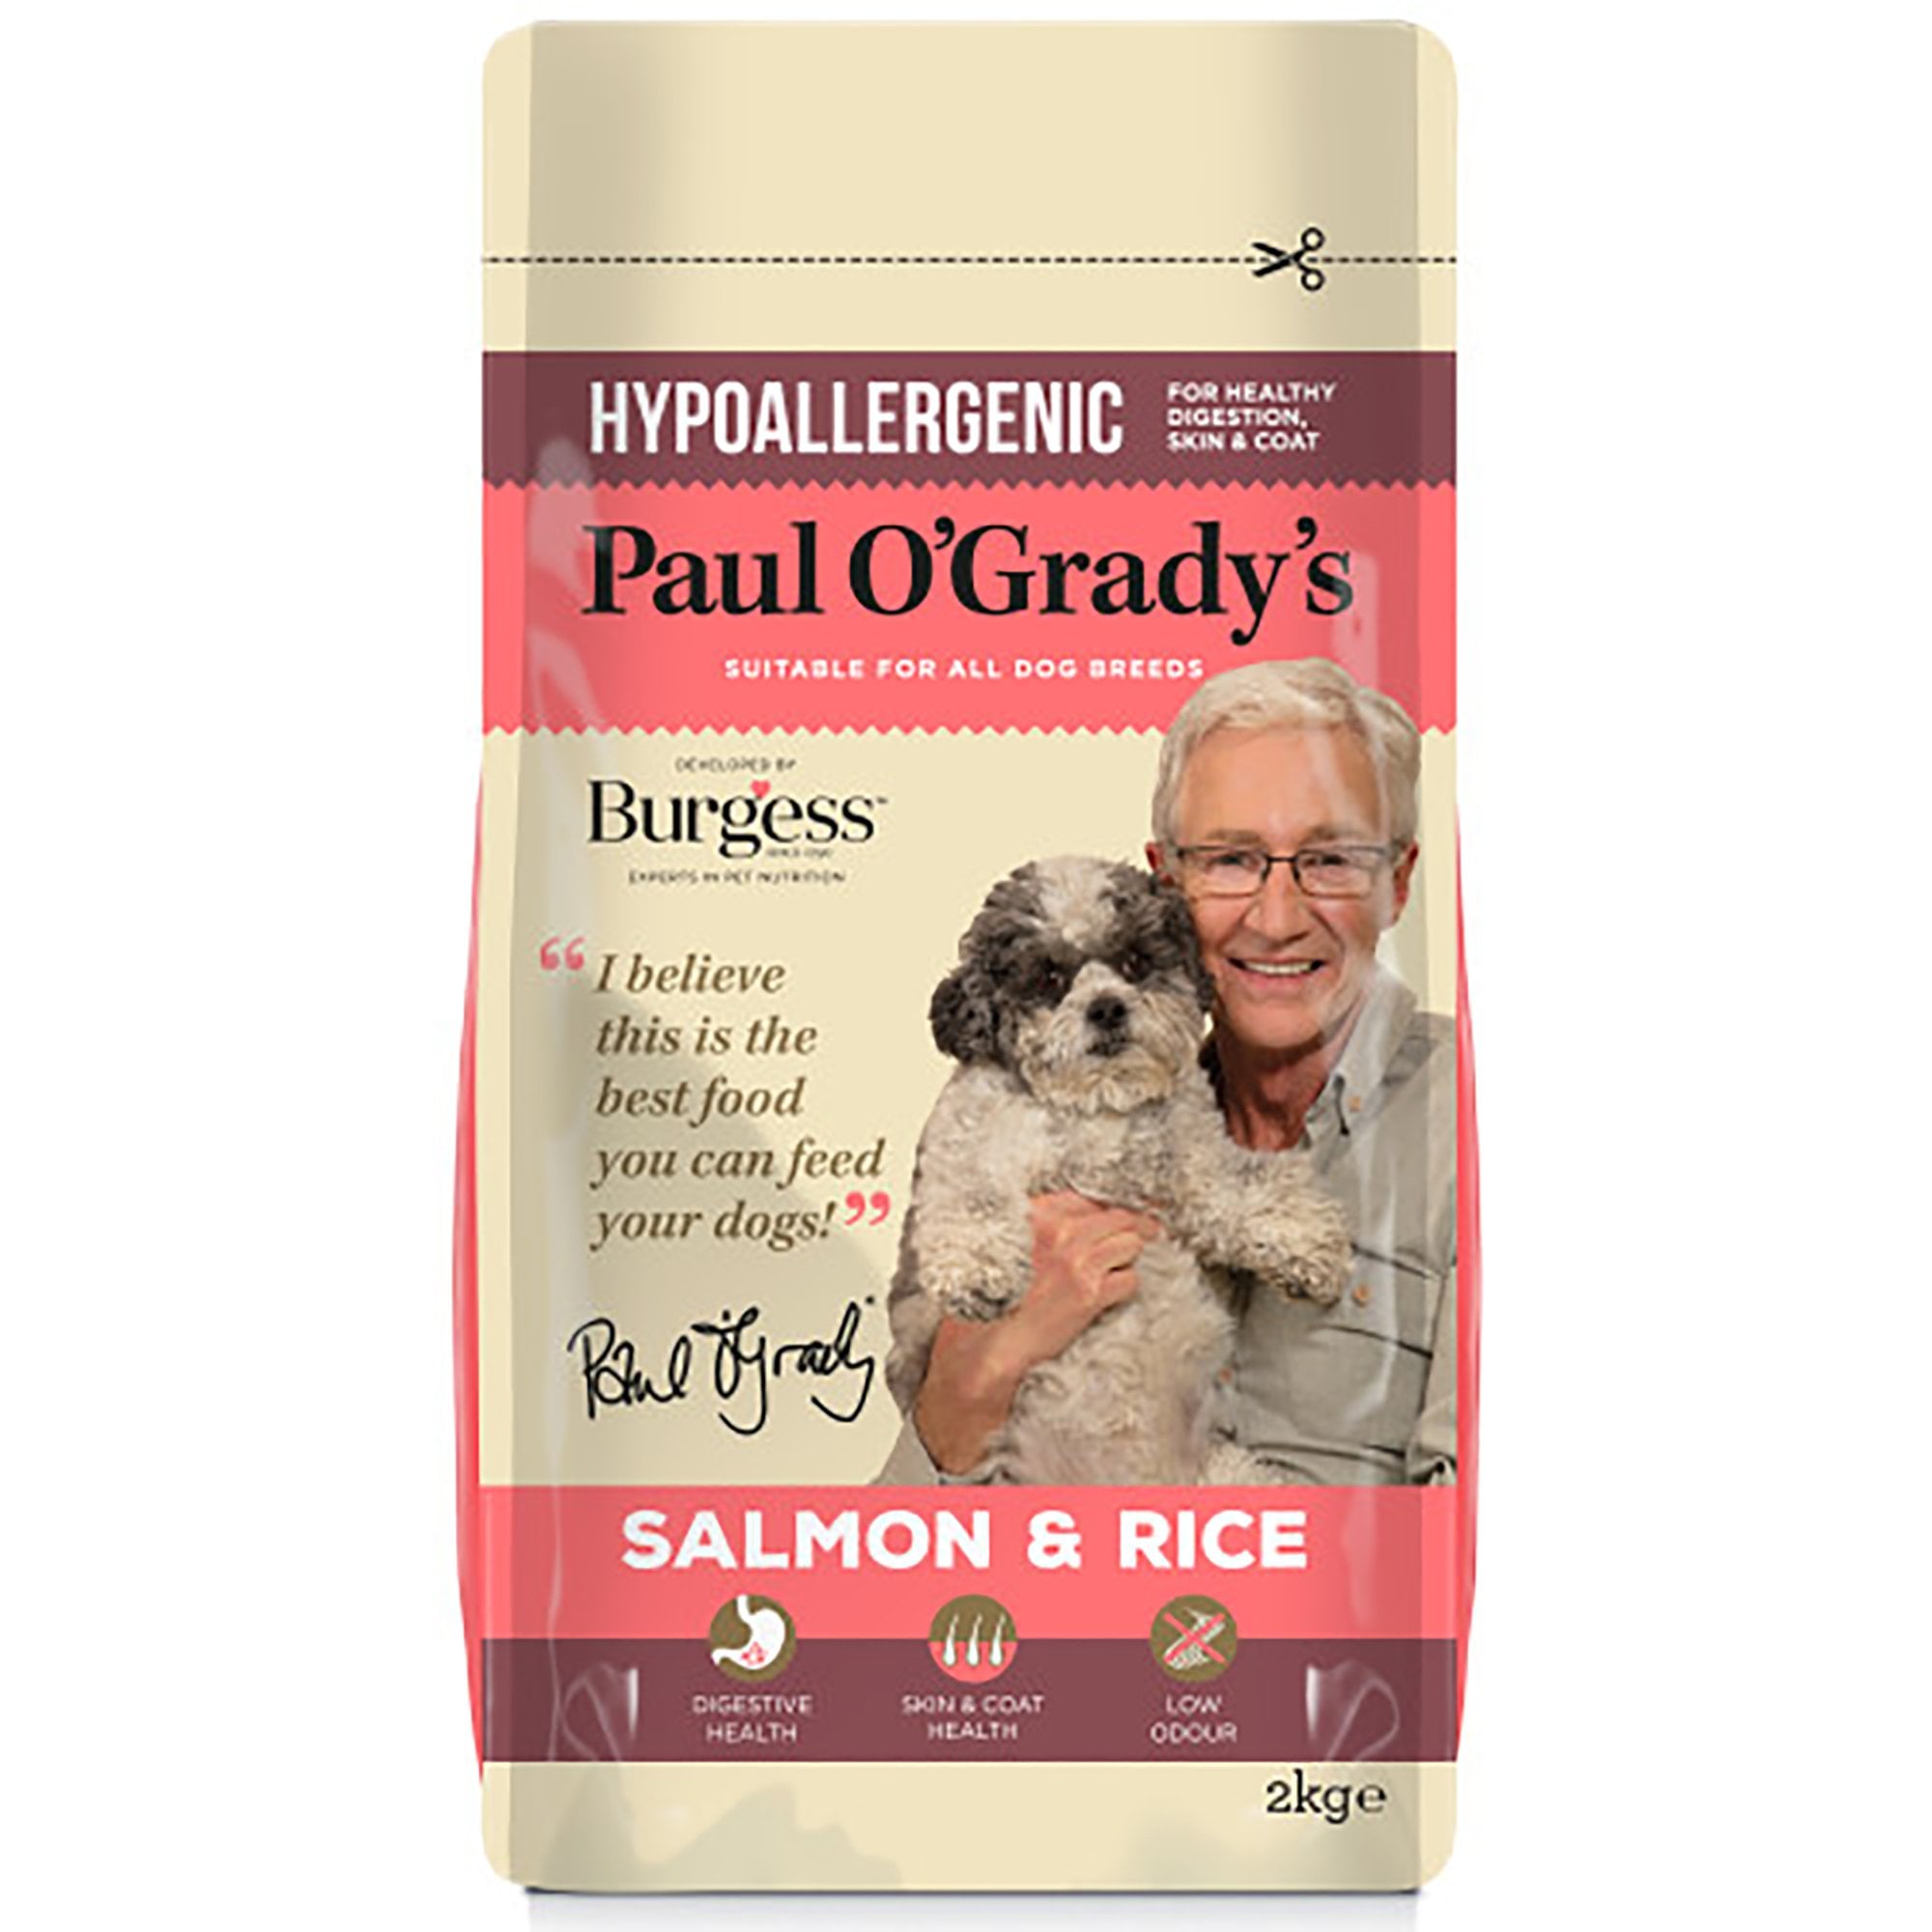 Paul O'Grady's Hypoallergenic Salmon & Rice Dog Food